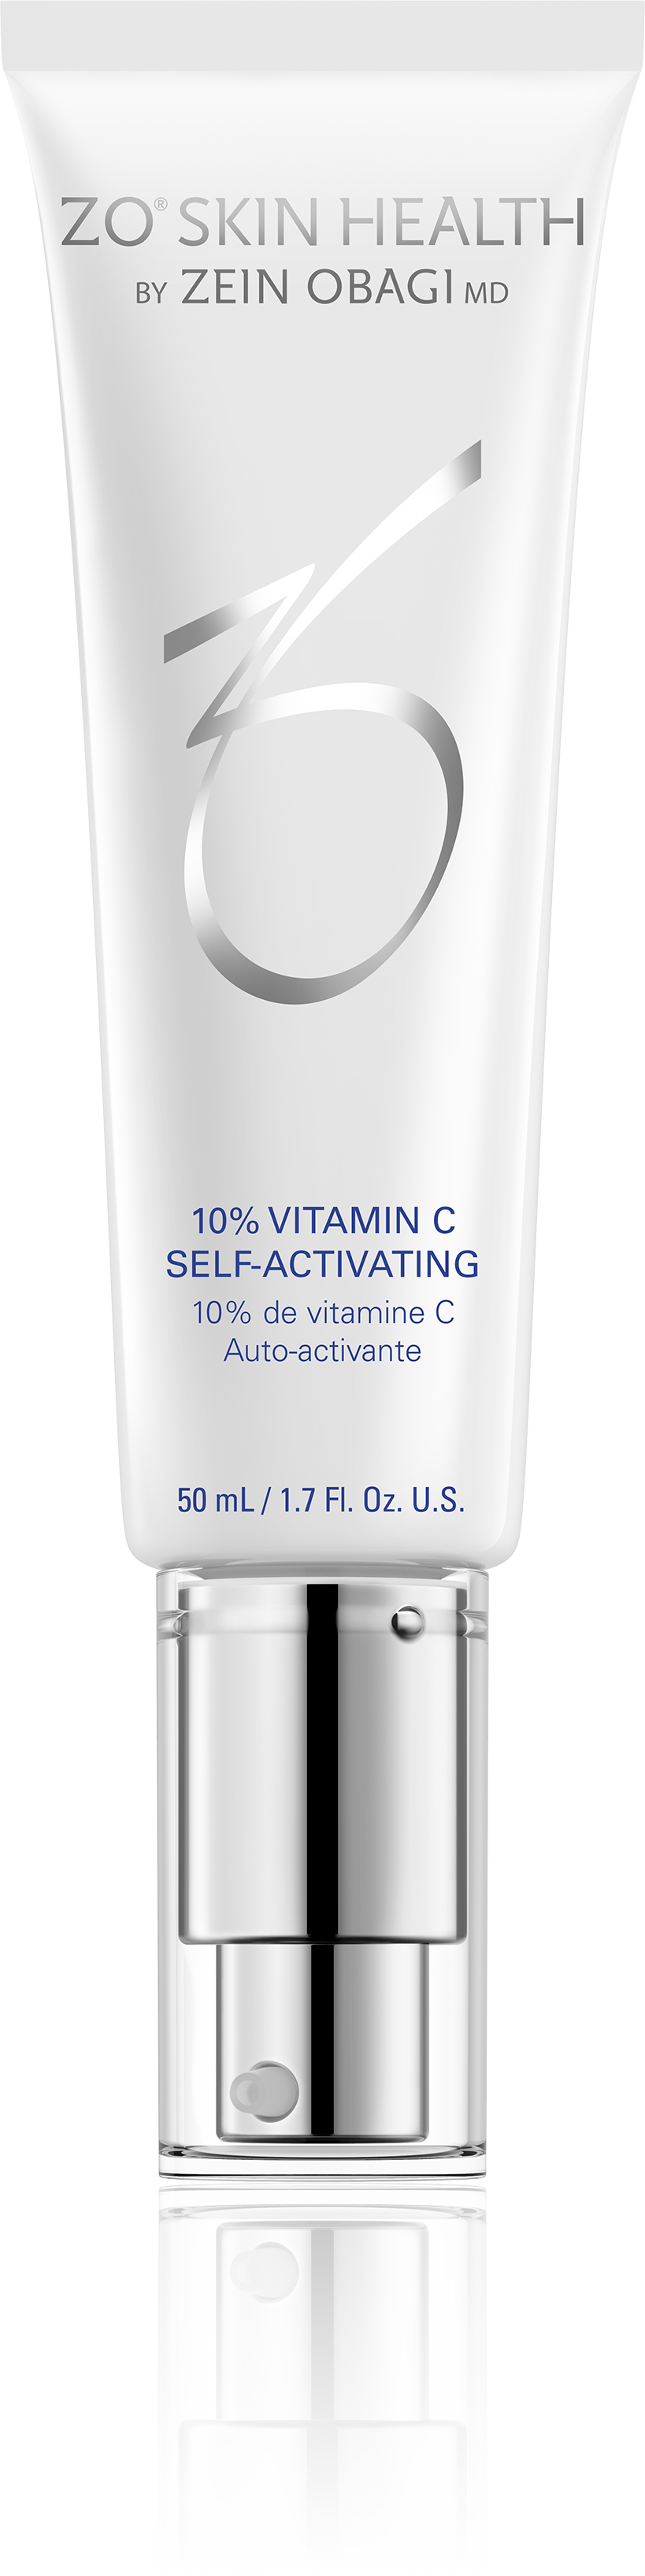 ZO 10% Vitamin C Self-Activating